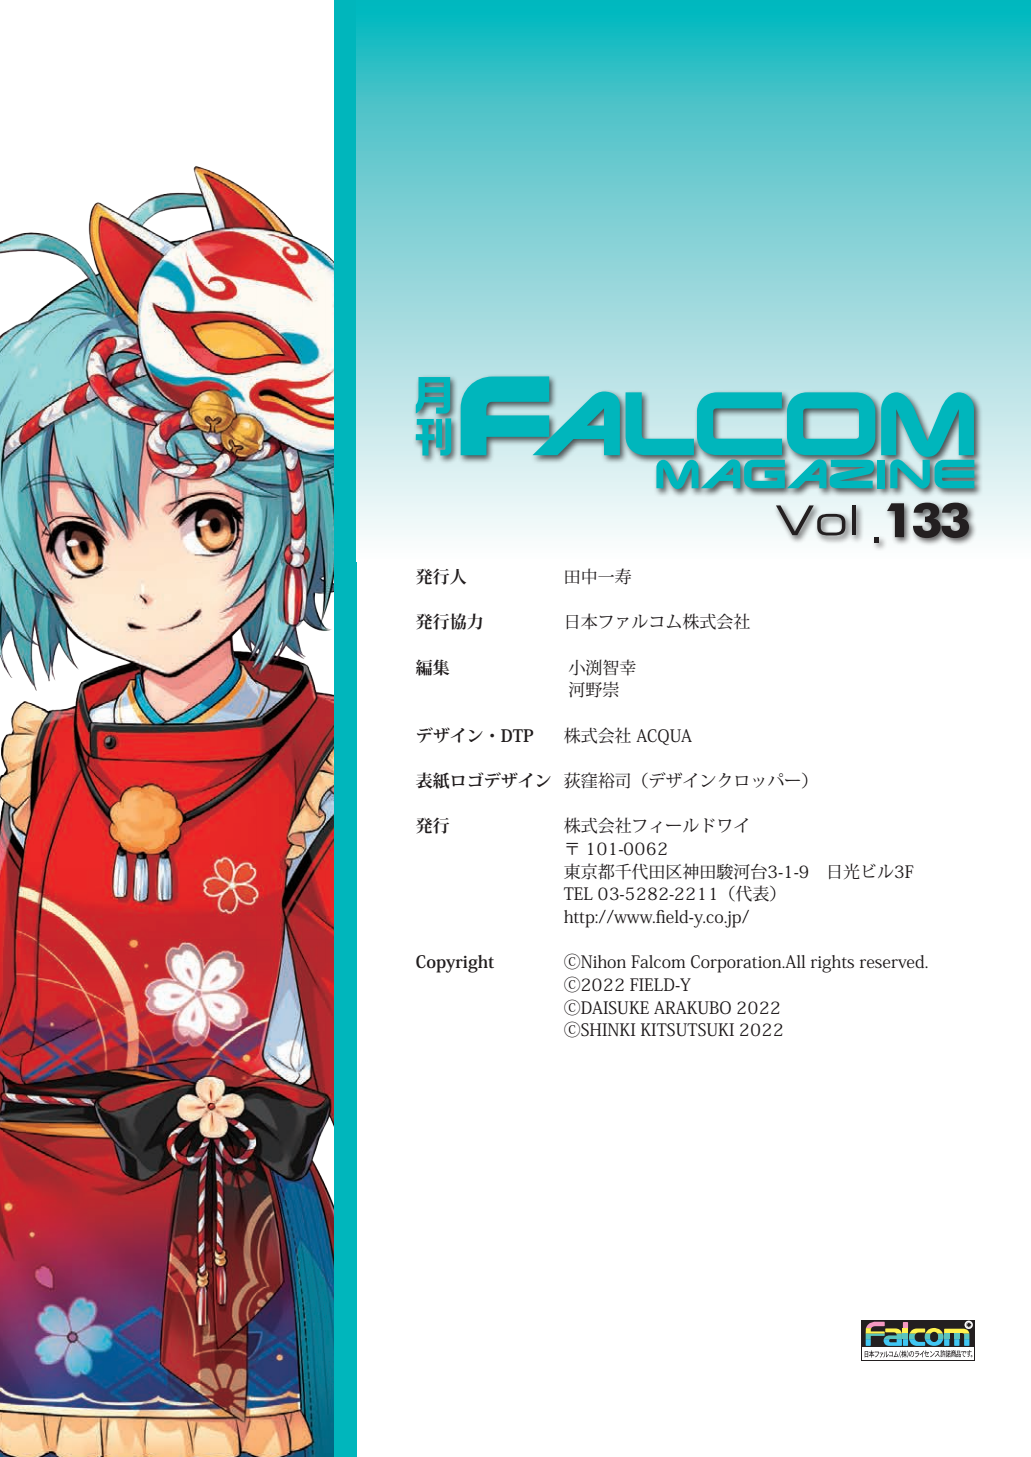 Falcommagazine133-3.png